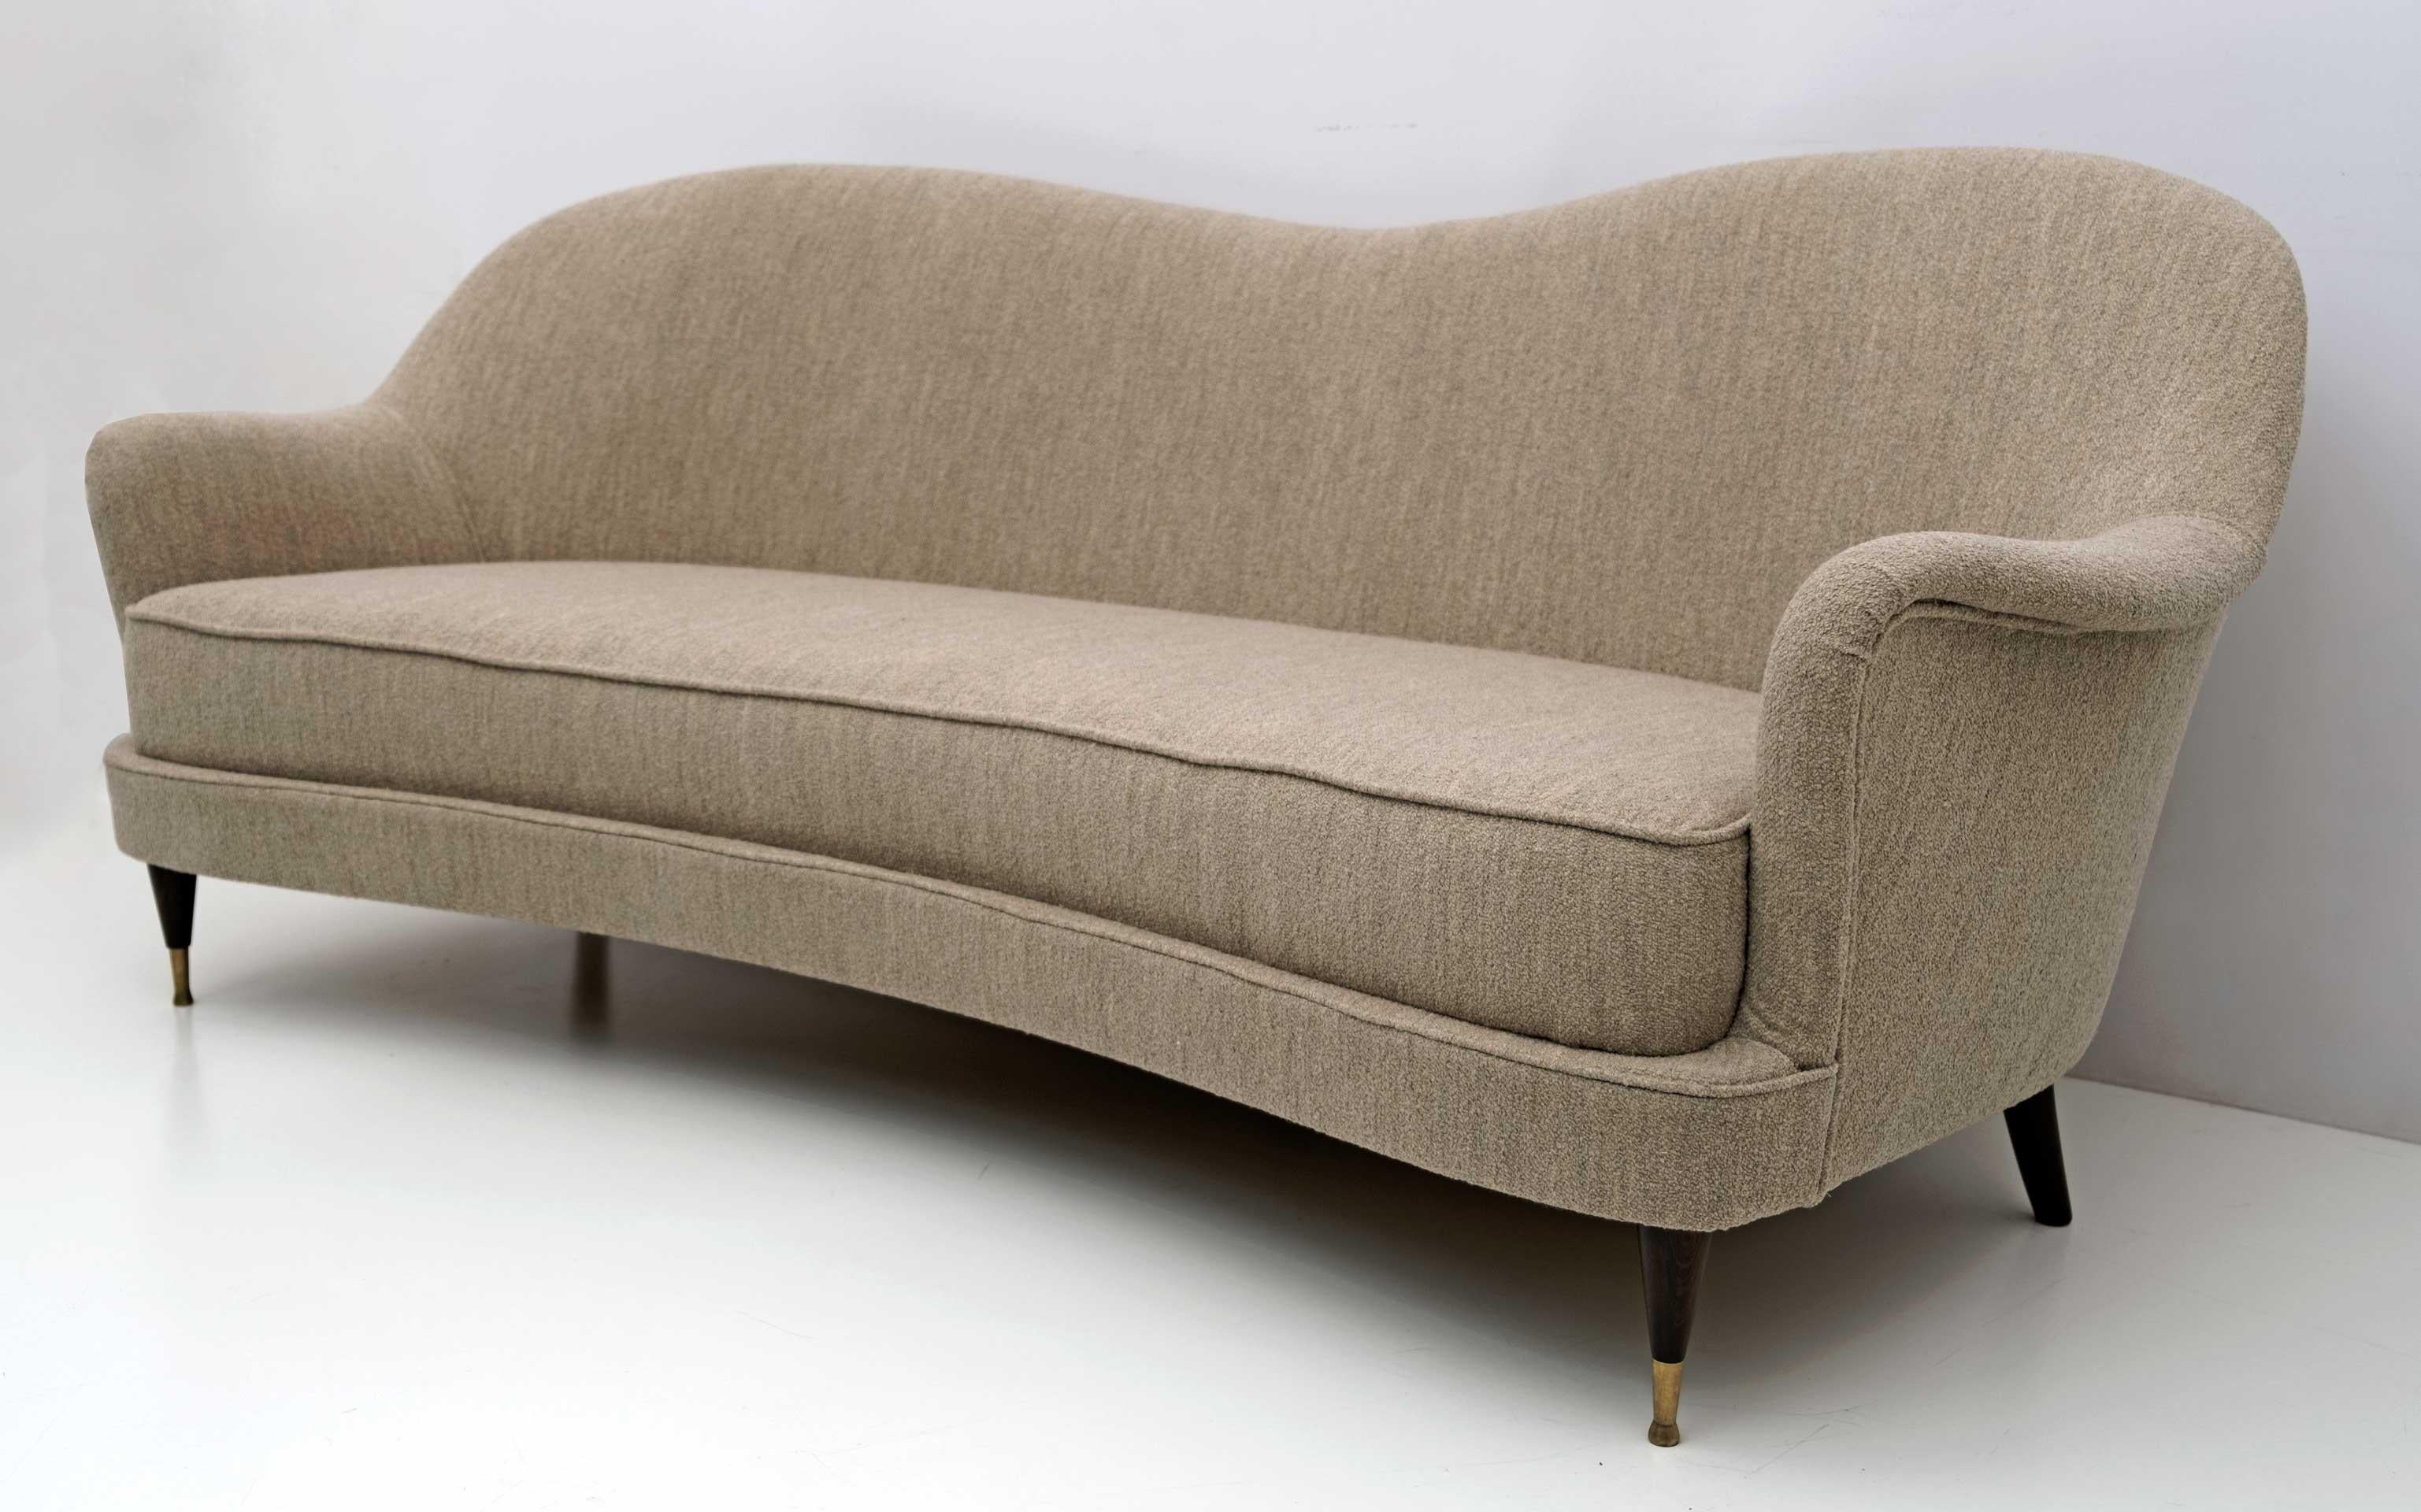 Mid-20th Century Gio Ponti Style Mid-Century Modern Italian Sofa for Isa Bergamo, 50s For Sale